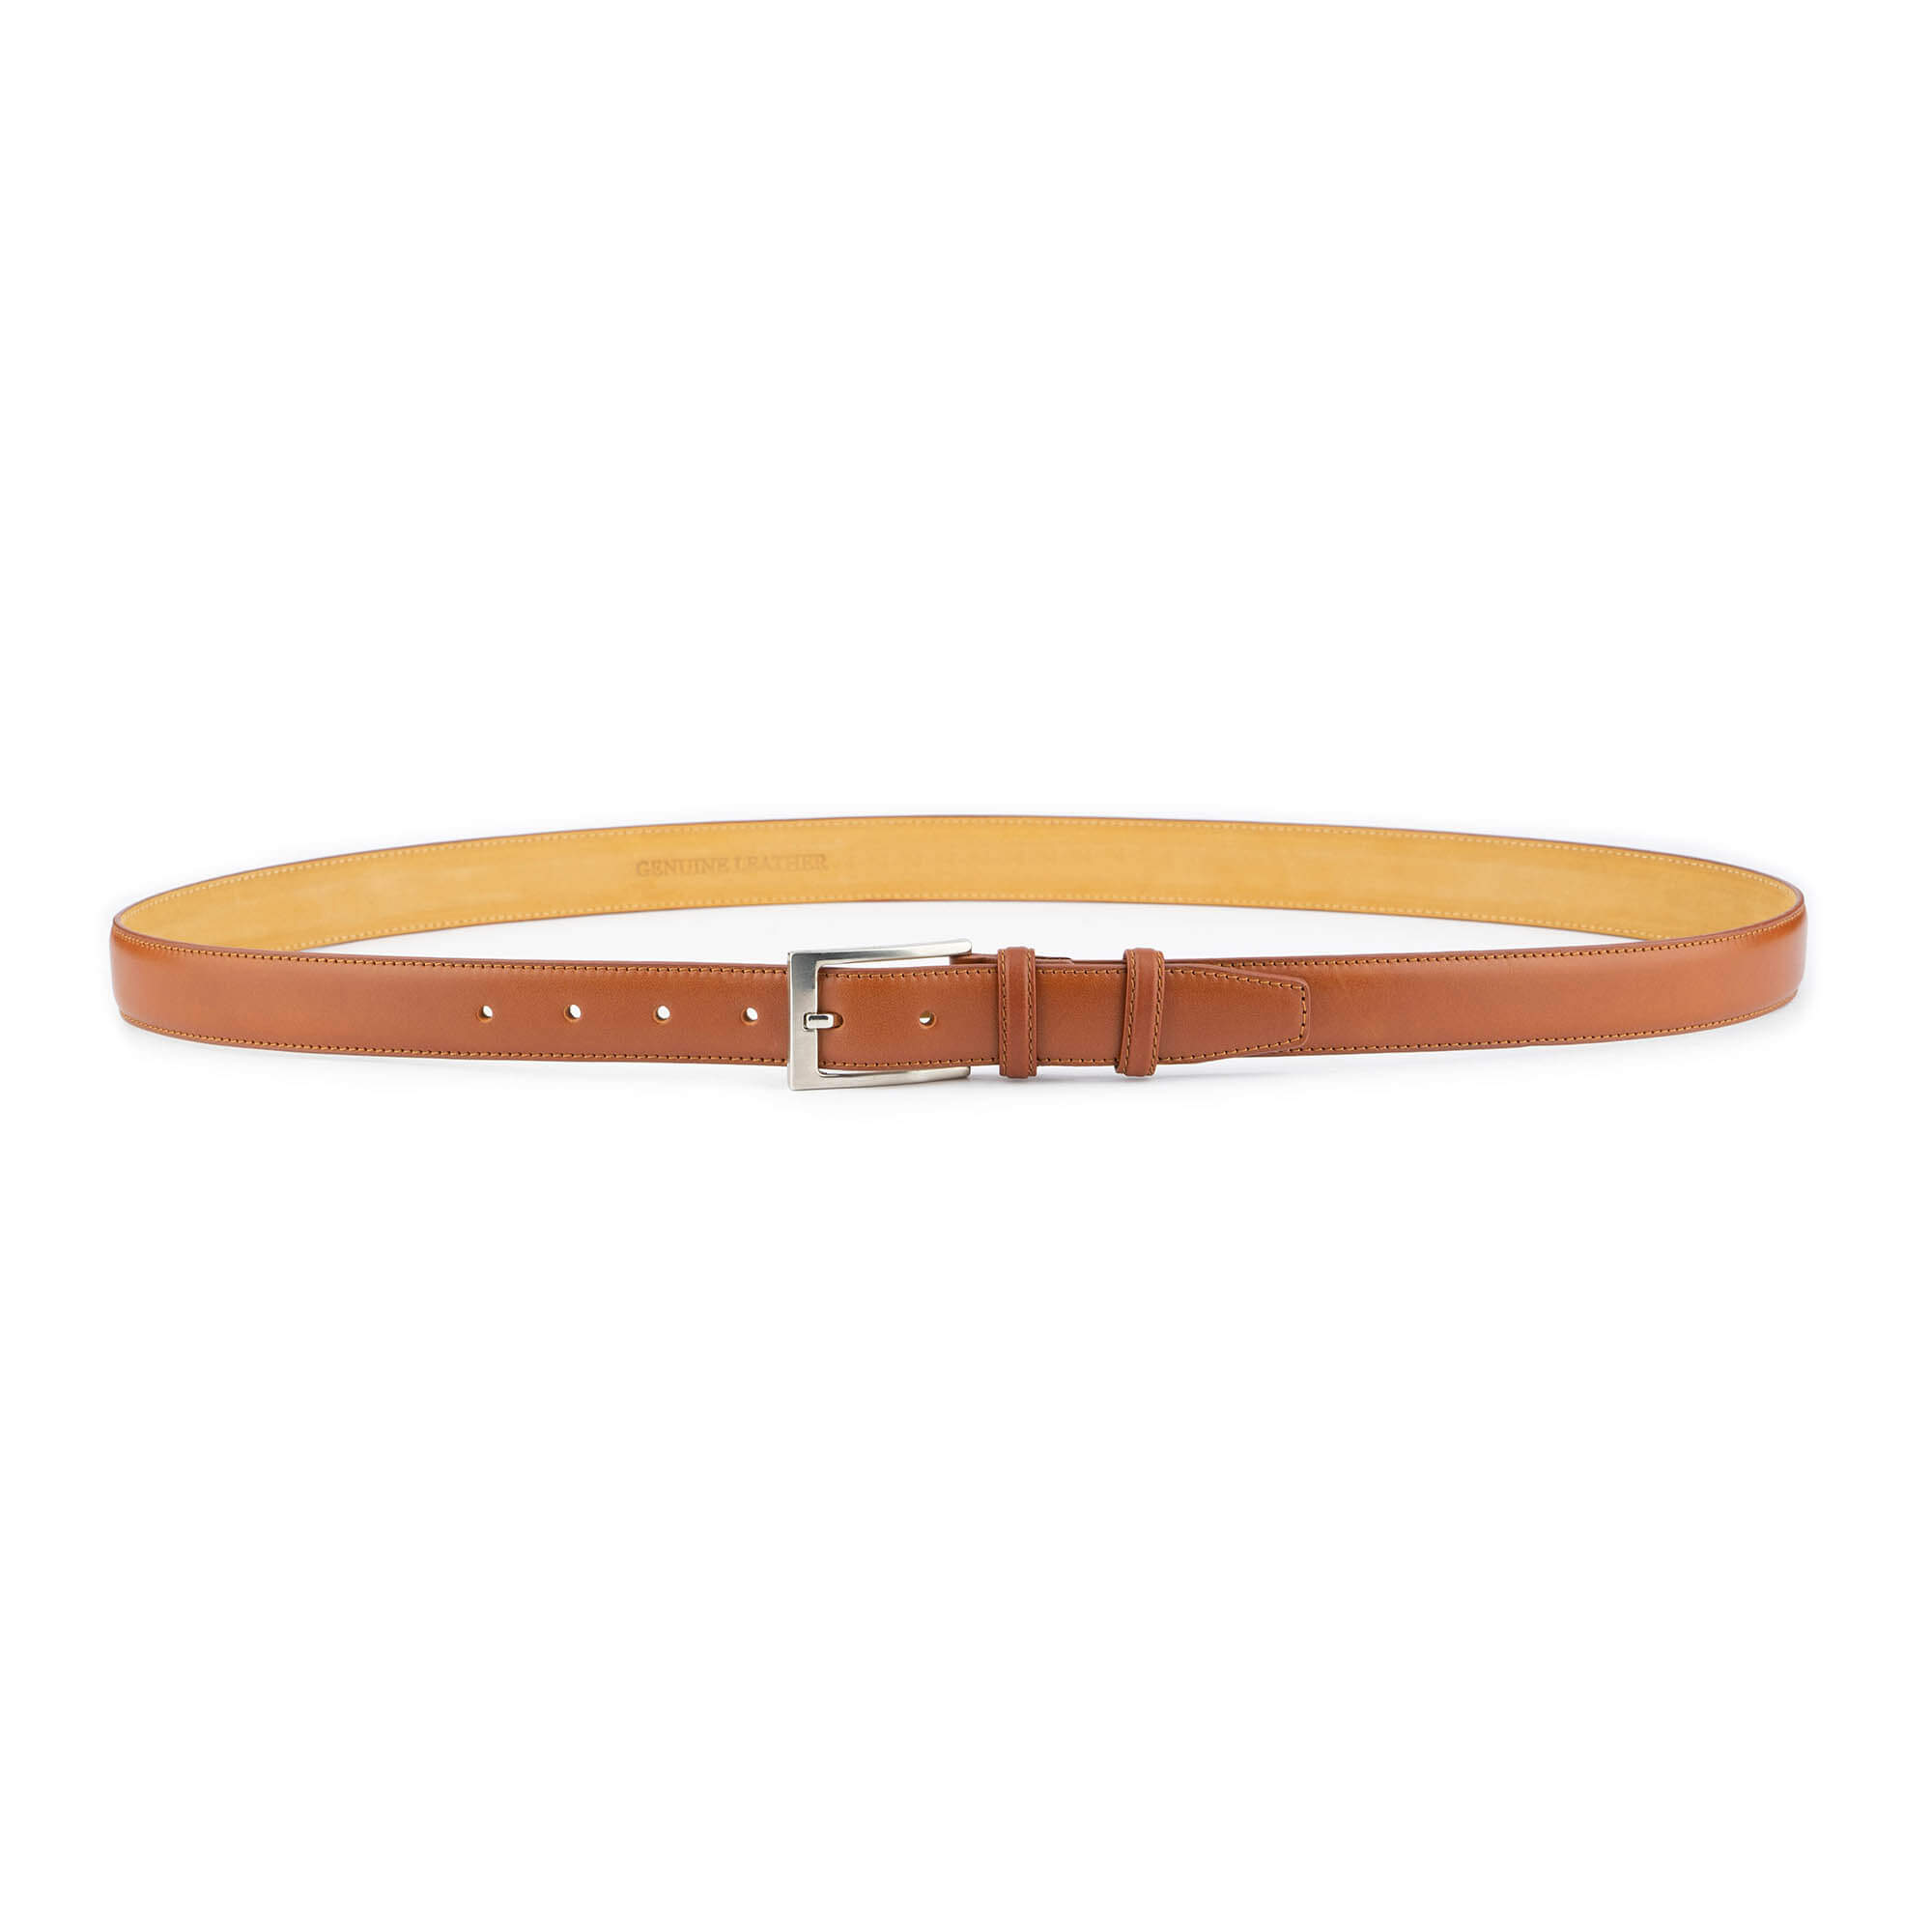 Buy Mens Light Brown Belt 3.0 Cm High Quality - LeatherBeltsOnline.com